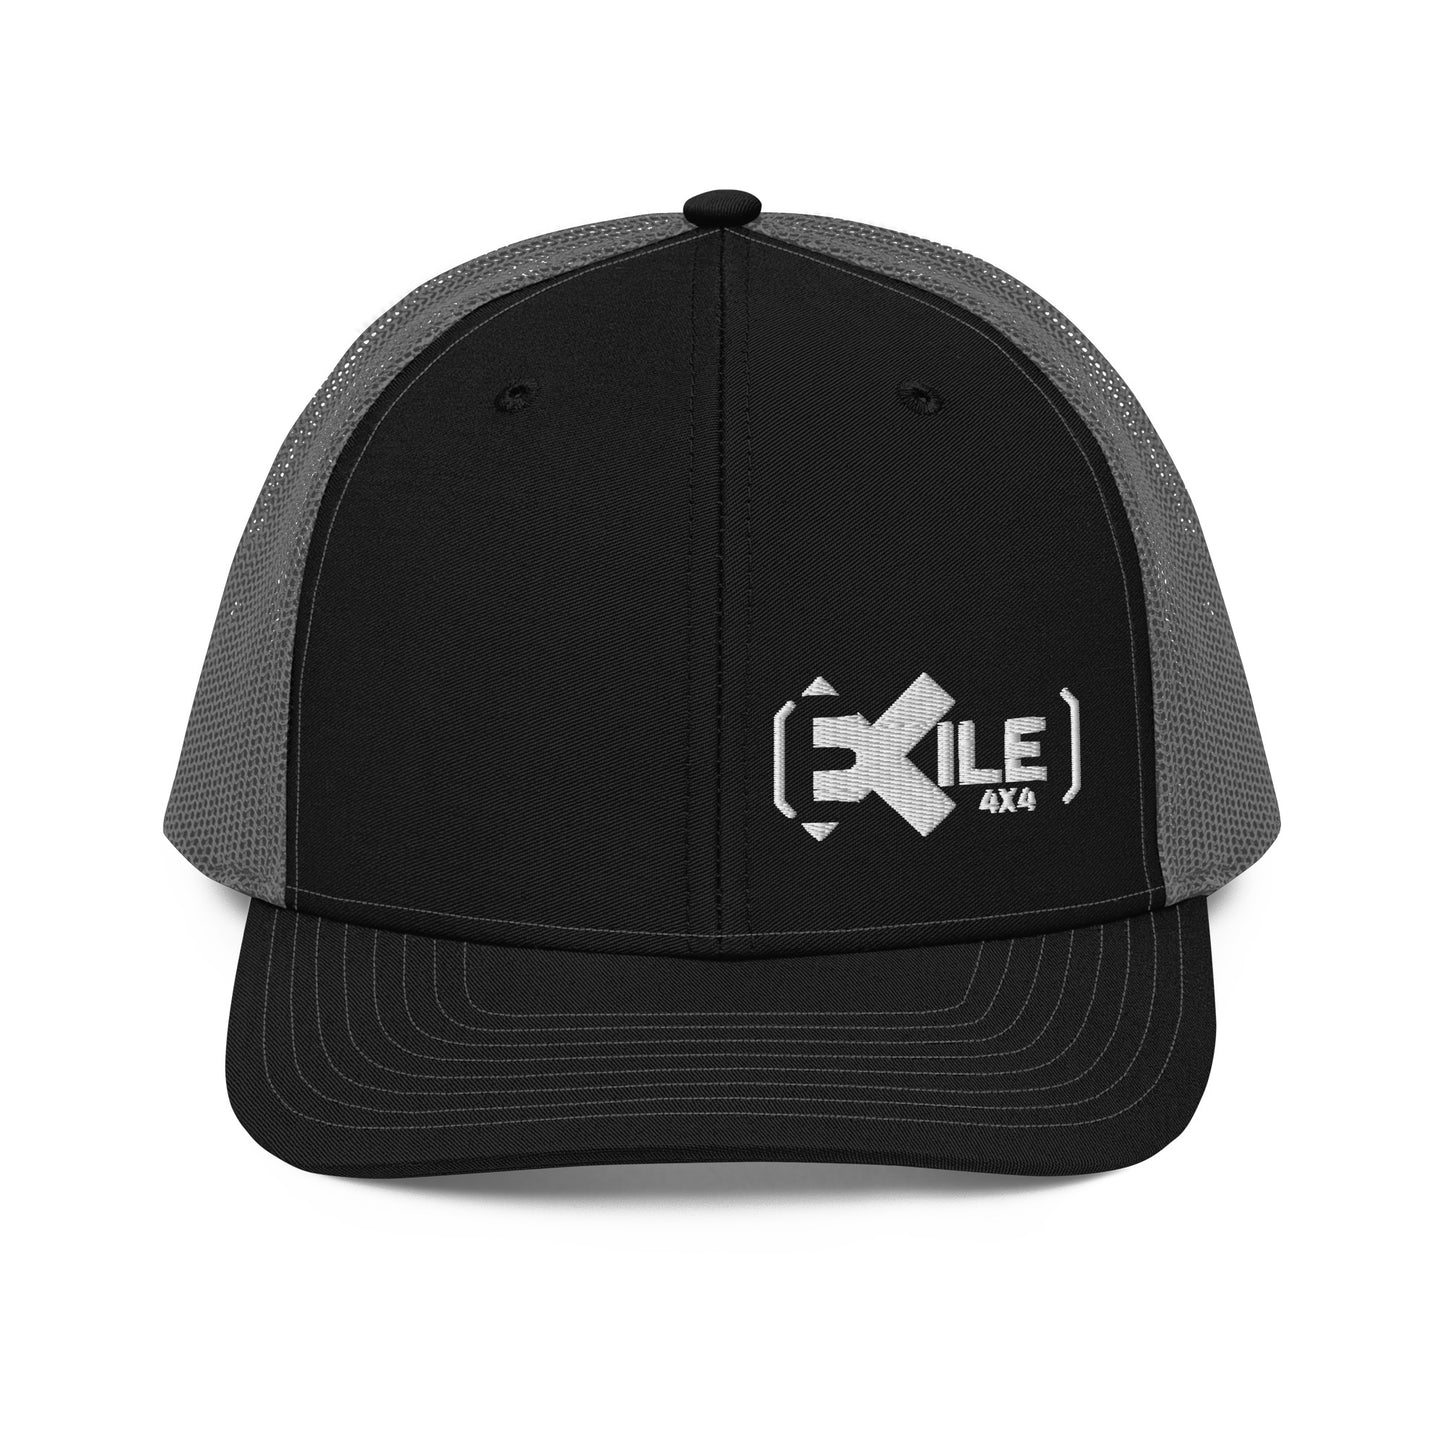 Exile Trucker Cap